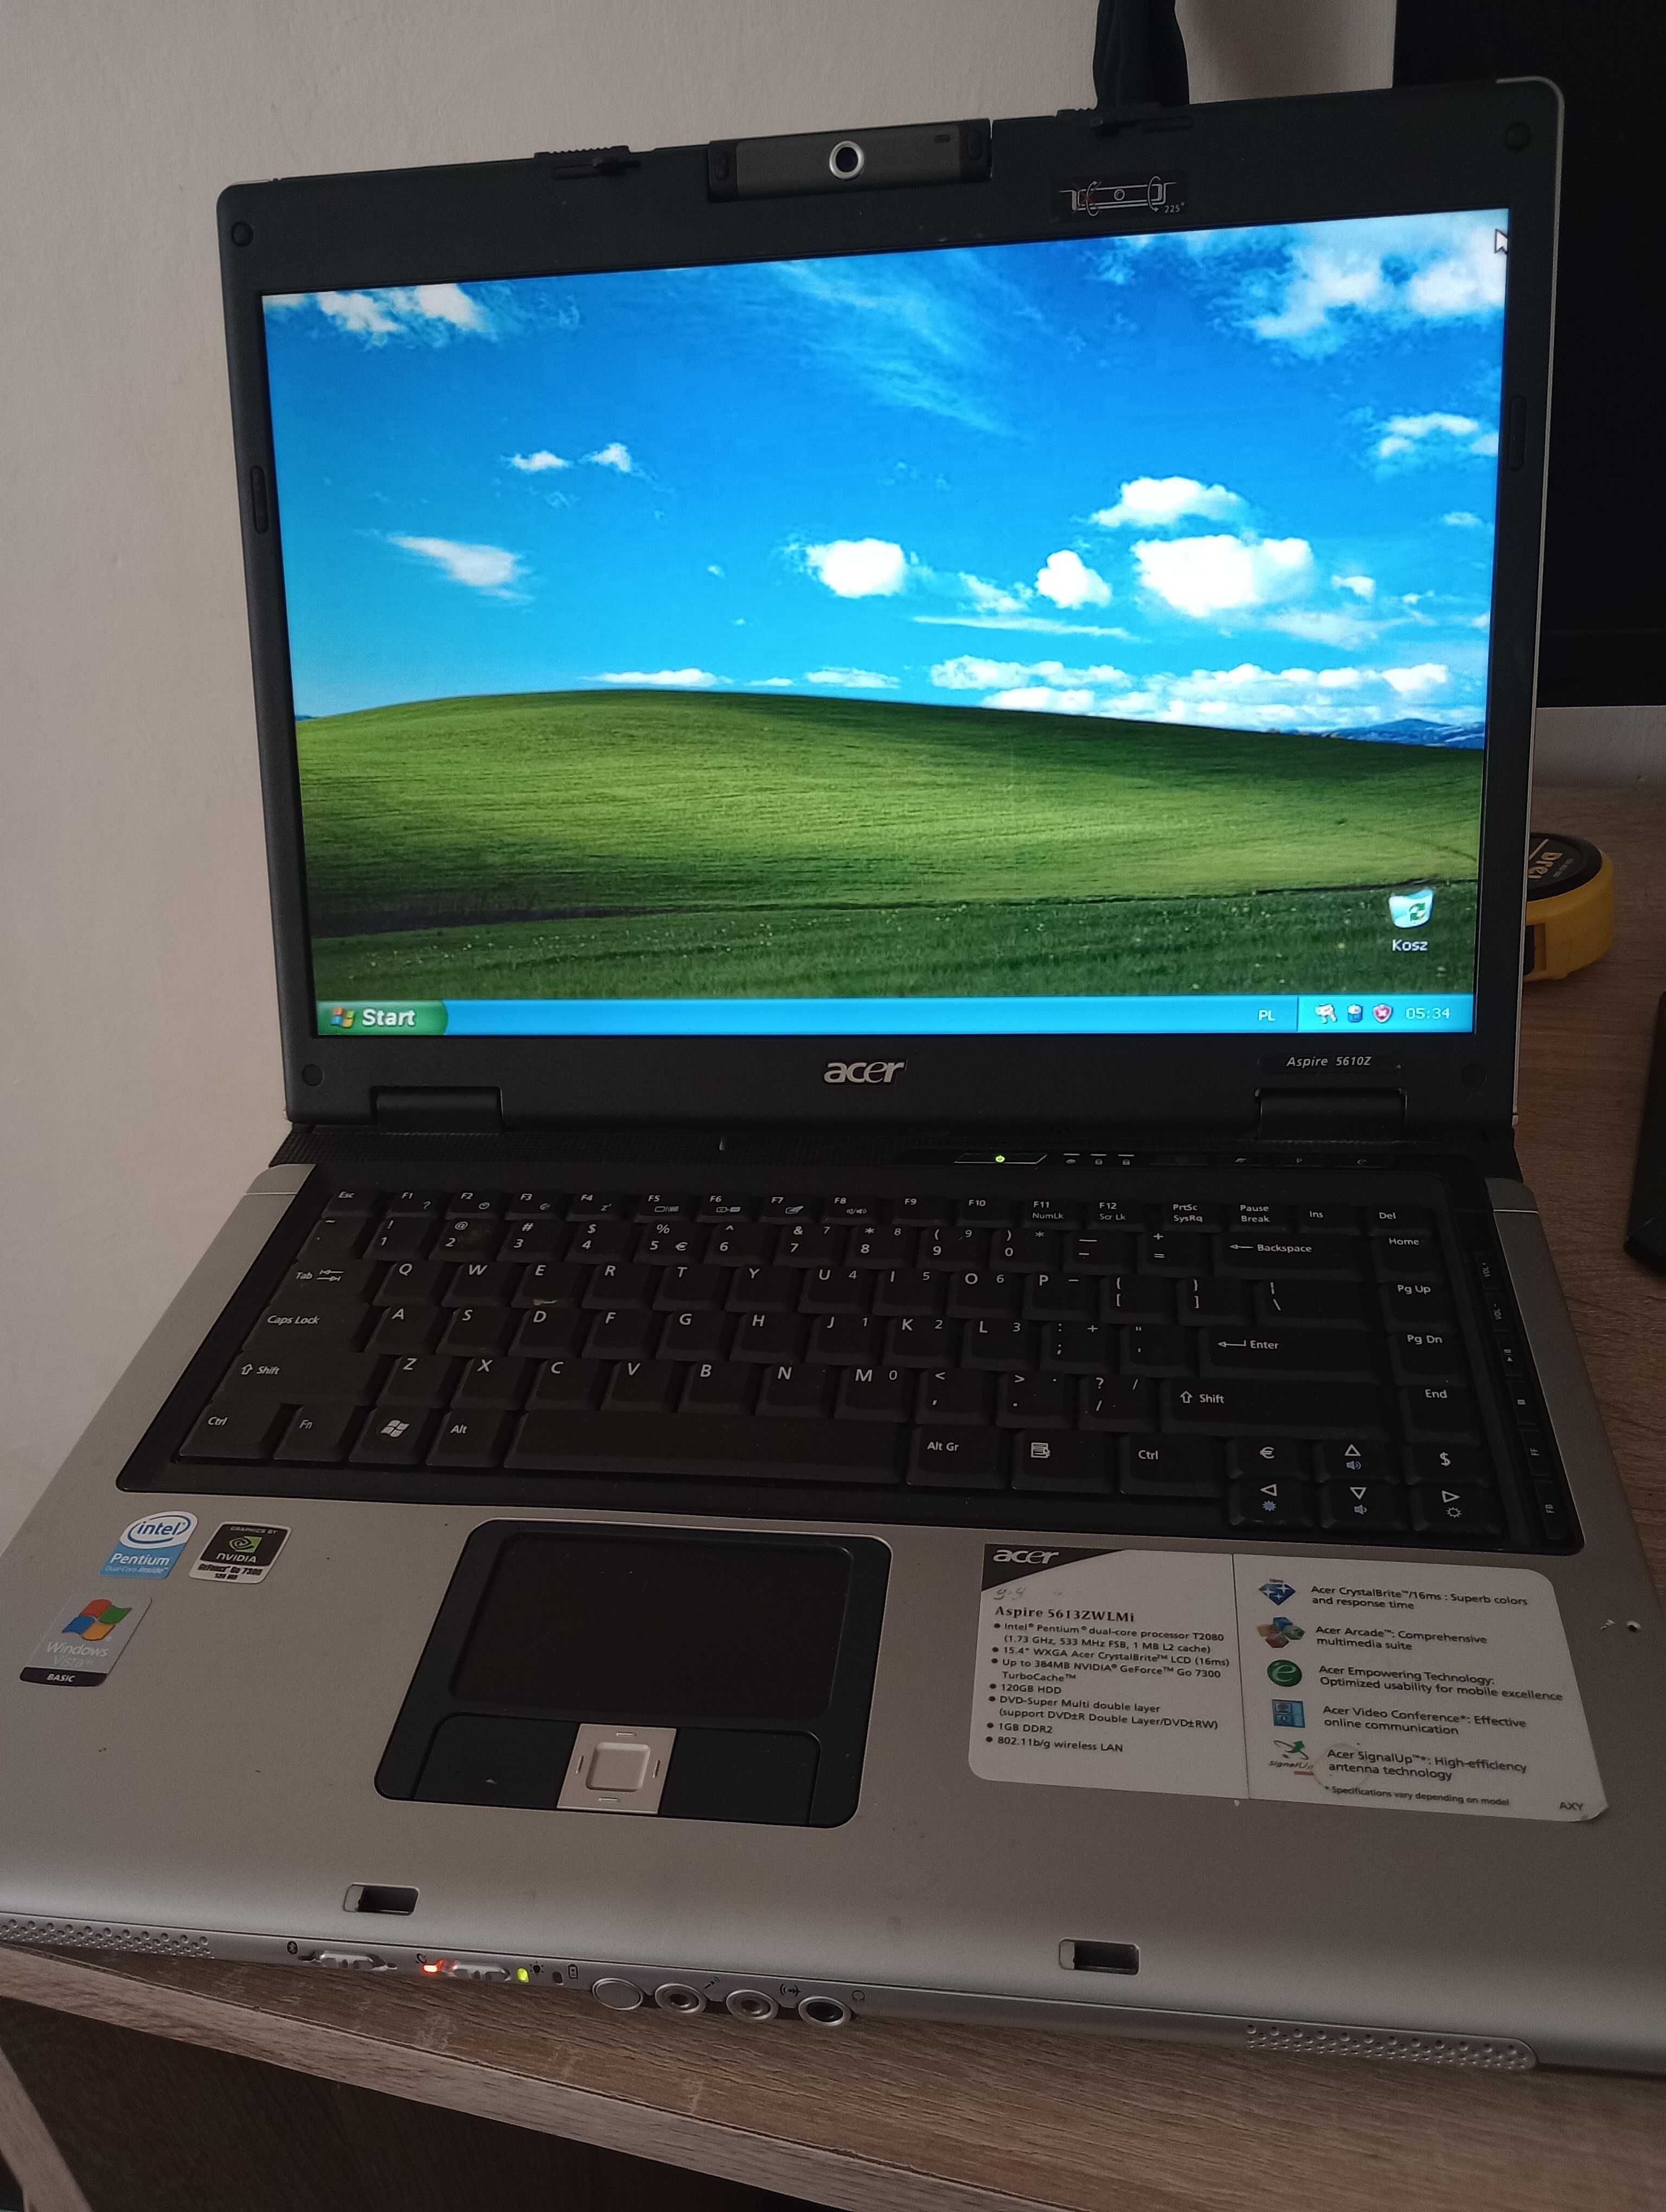 Laptop Acer Aspire 5610Z